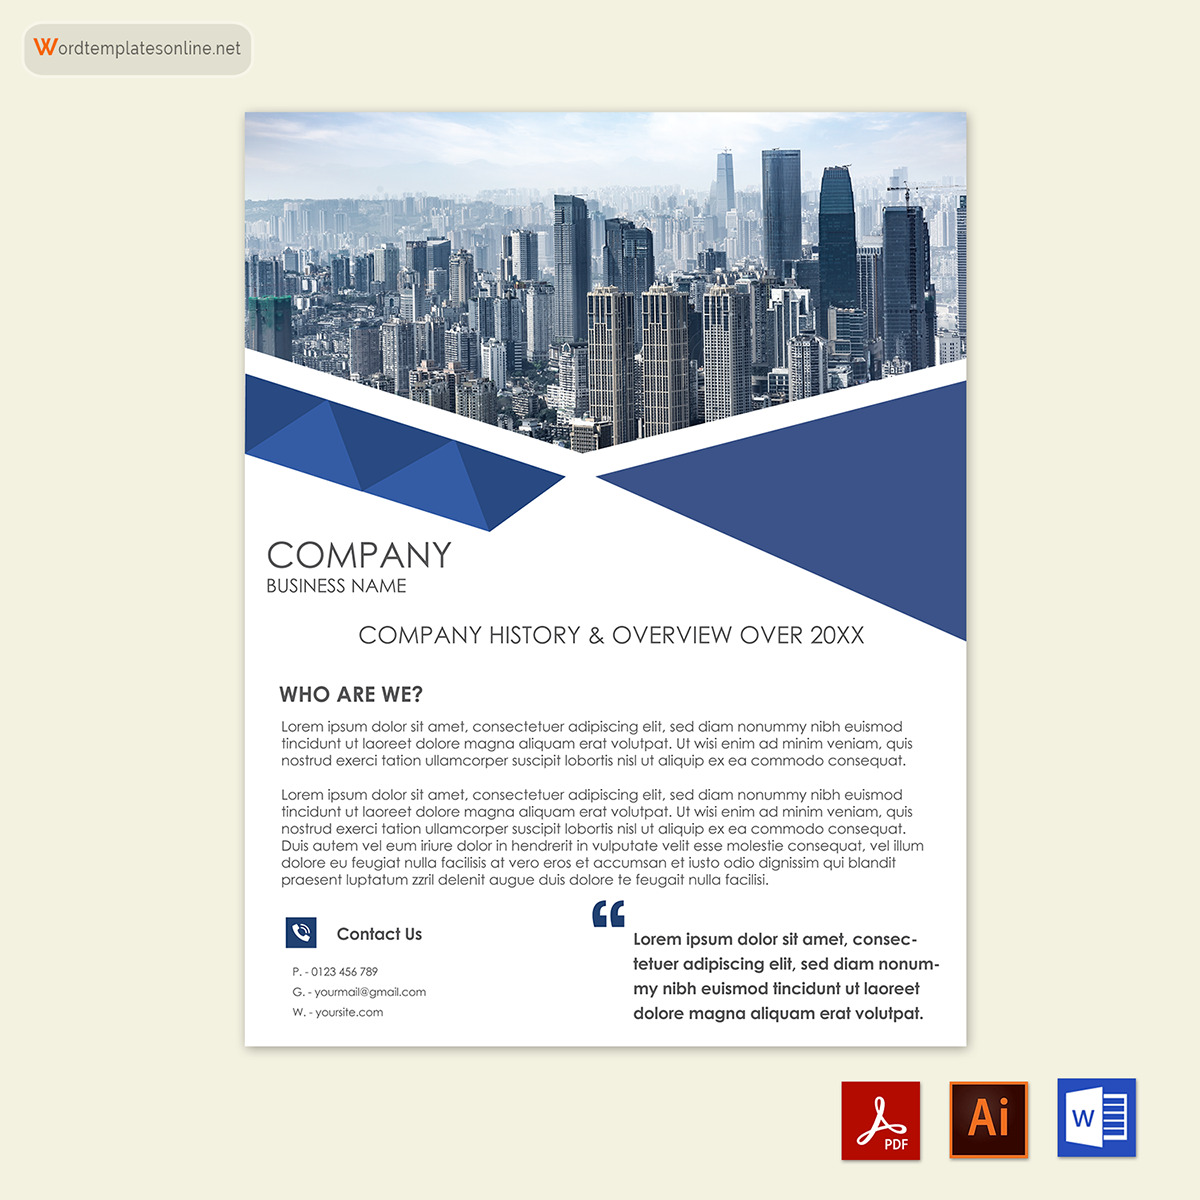 Free Company Profile Template - Download in Word, PDF, Adobe Illustrator 05